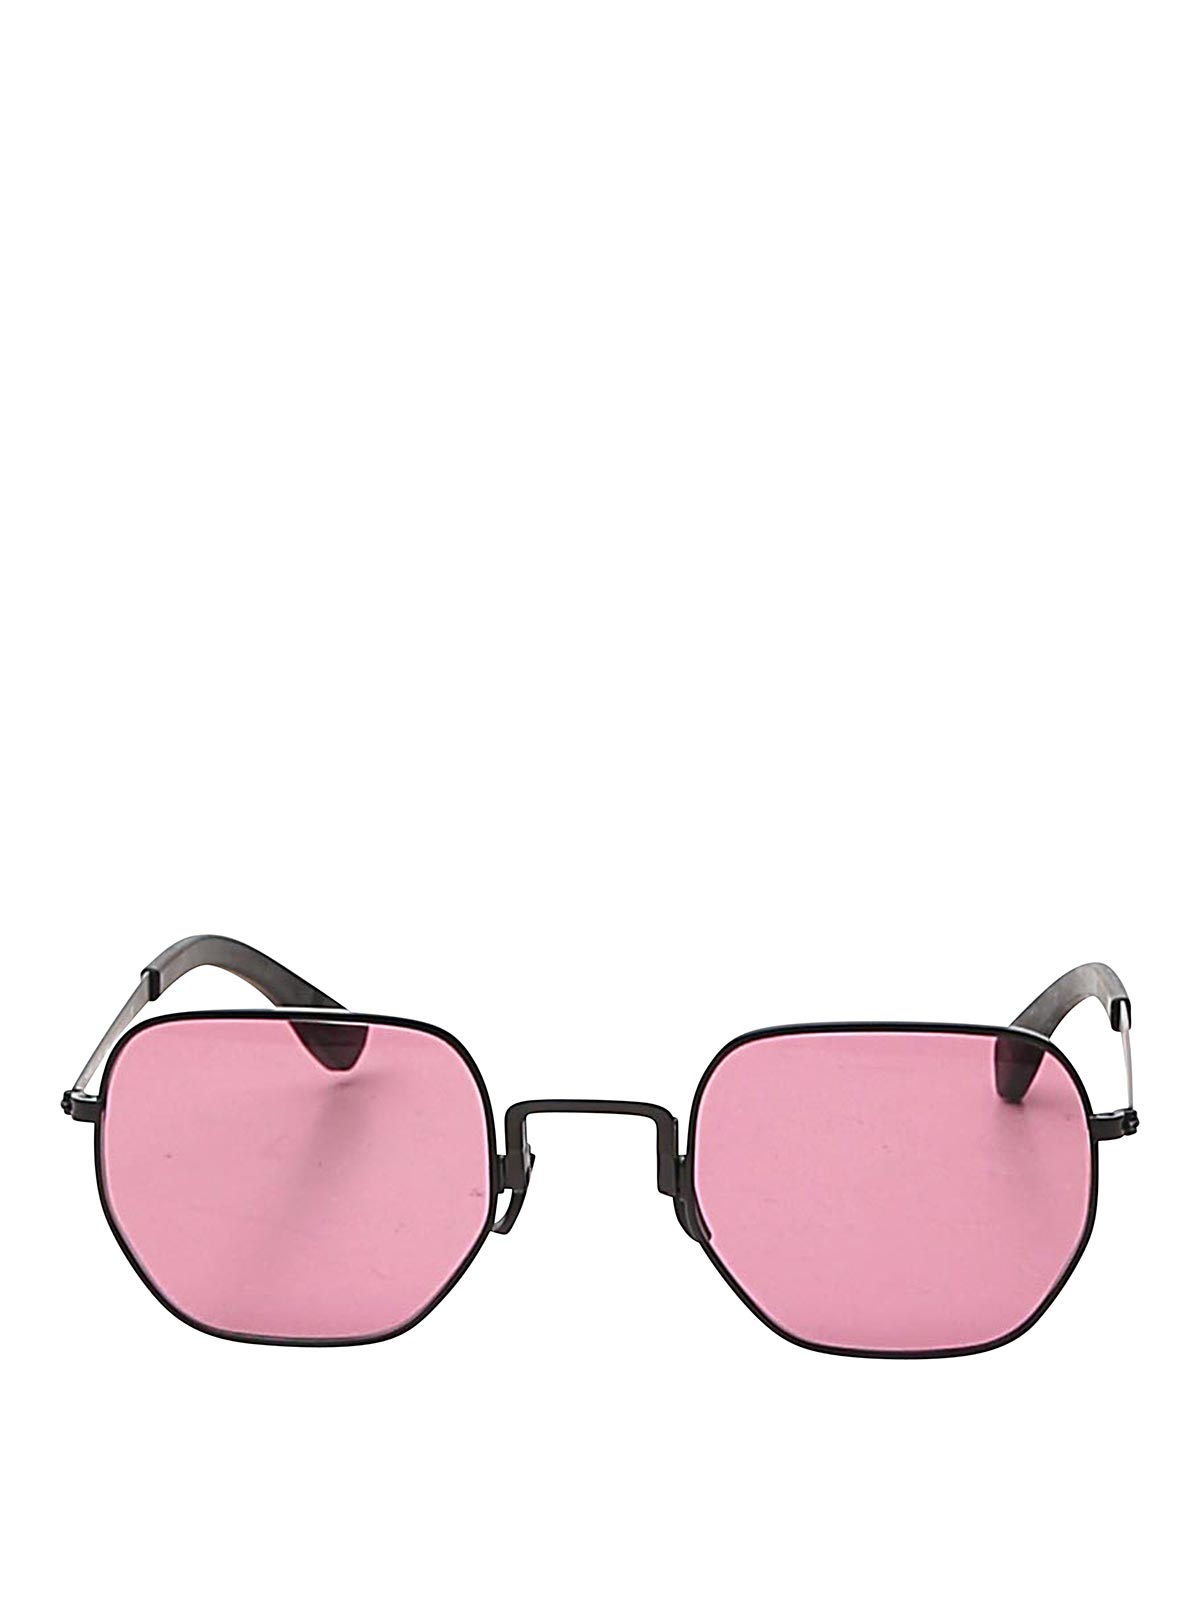 Movitra Sunglasses In Matte Black With Wine Lenses